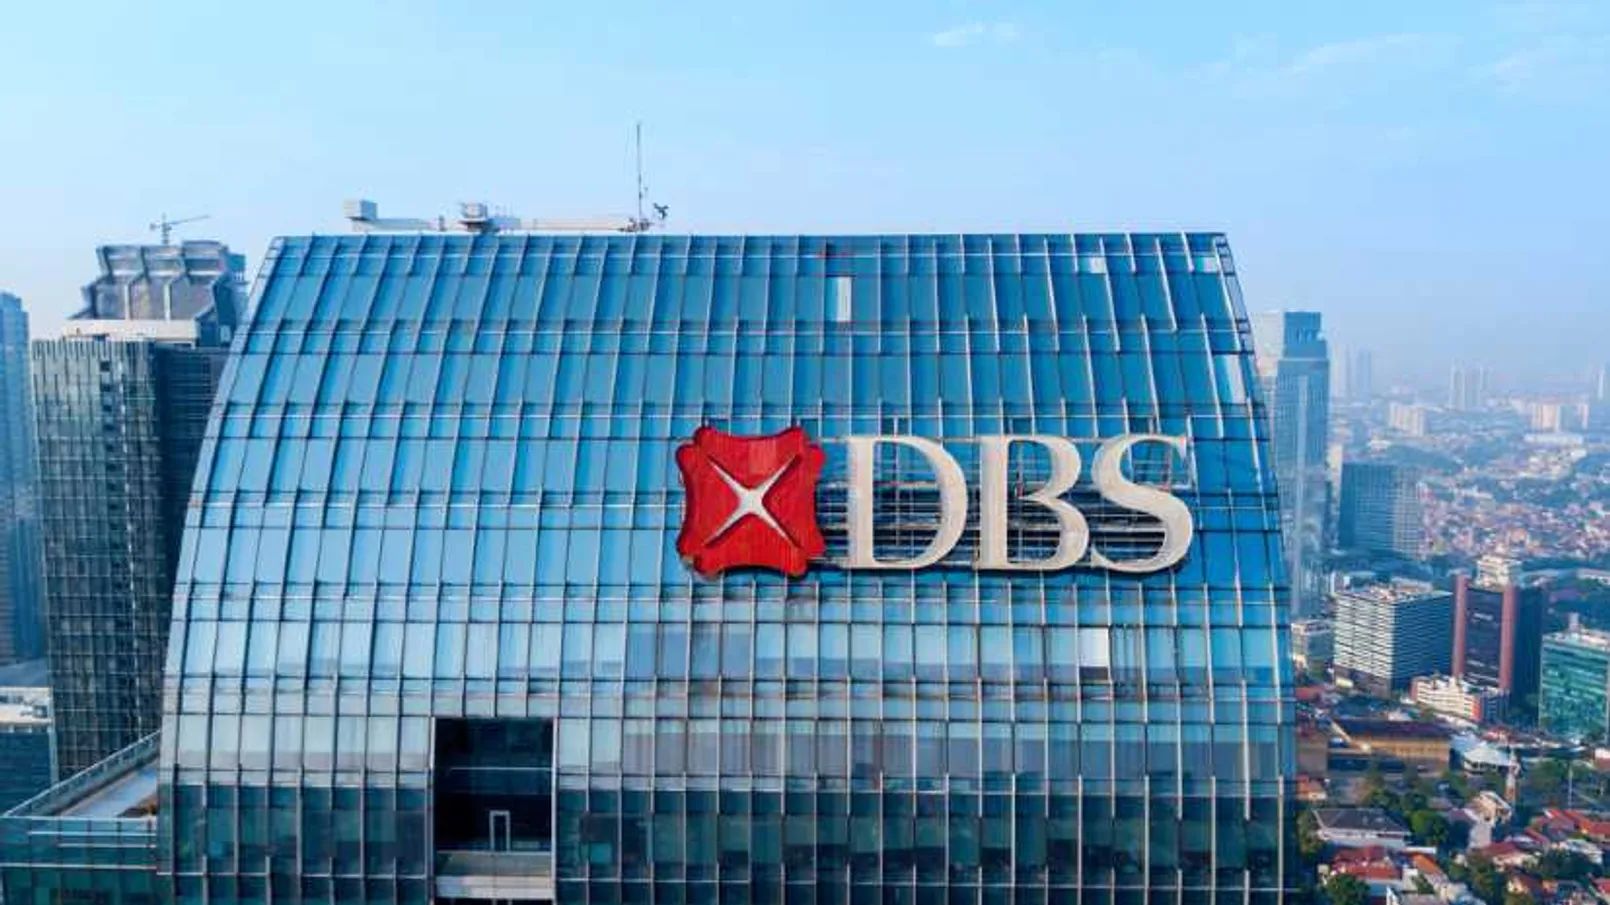 Dbs Bank Taiwan Ifm.jpg